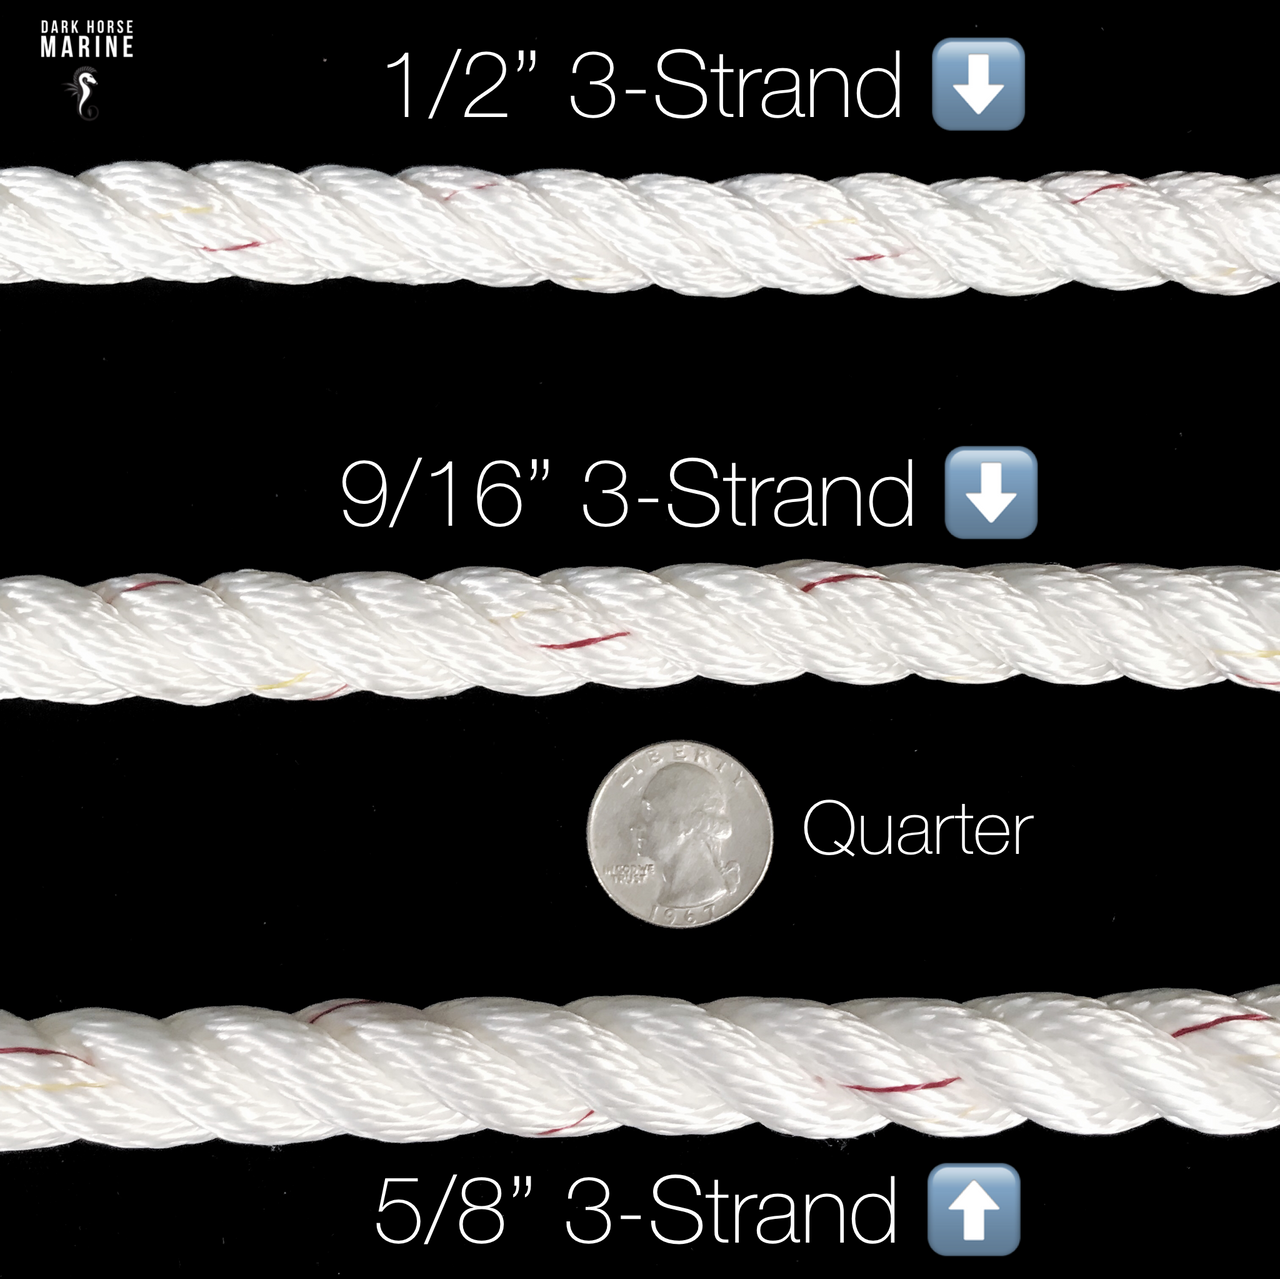 Windlass Anchor Rode 25' 1/4 Stainless Steel Chain 1/2 3-Strand Nylon  Rope - Dark Horse Marine, LLC